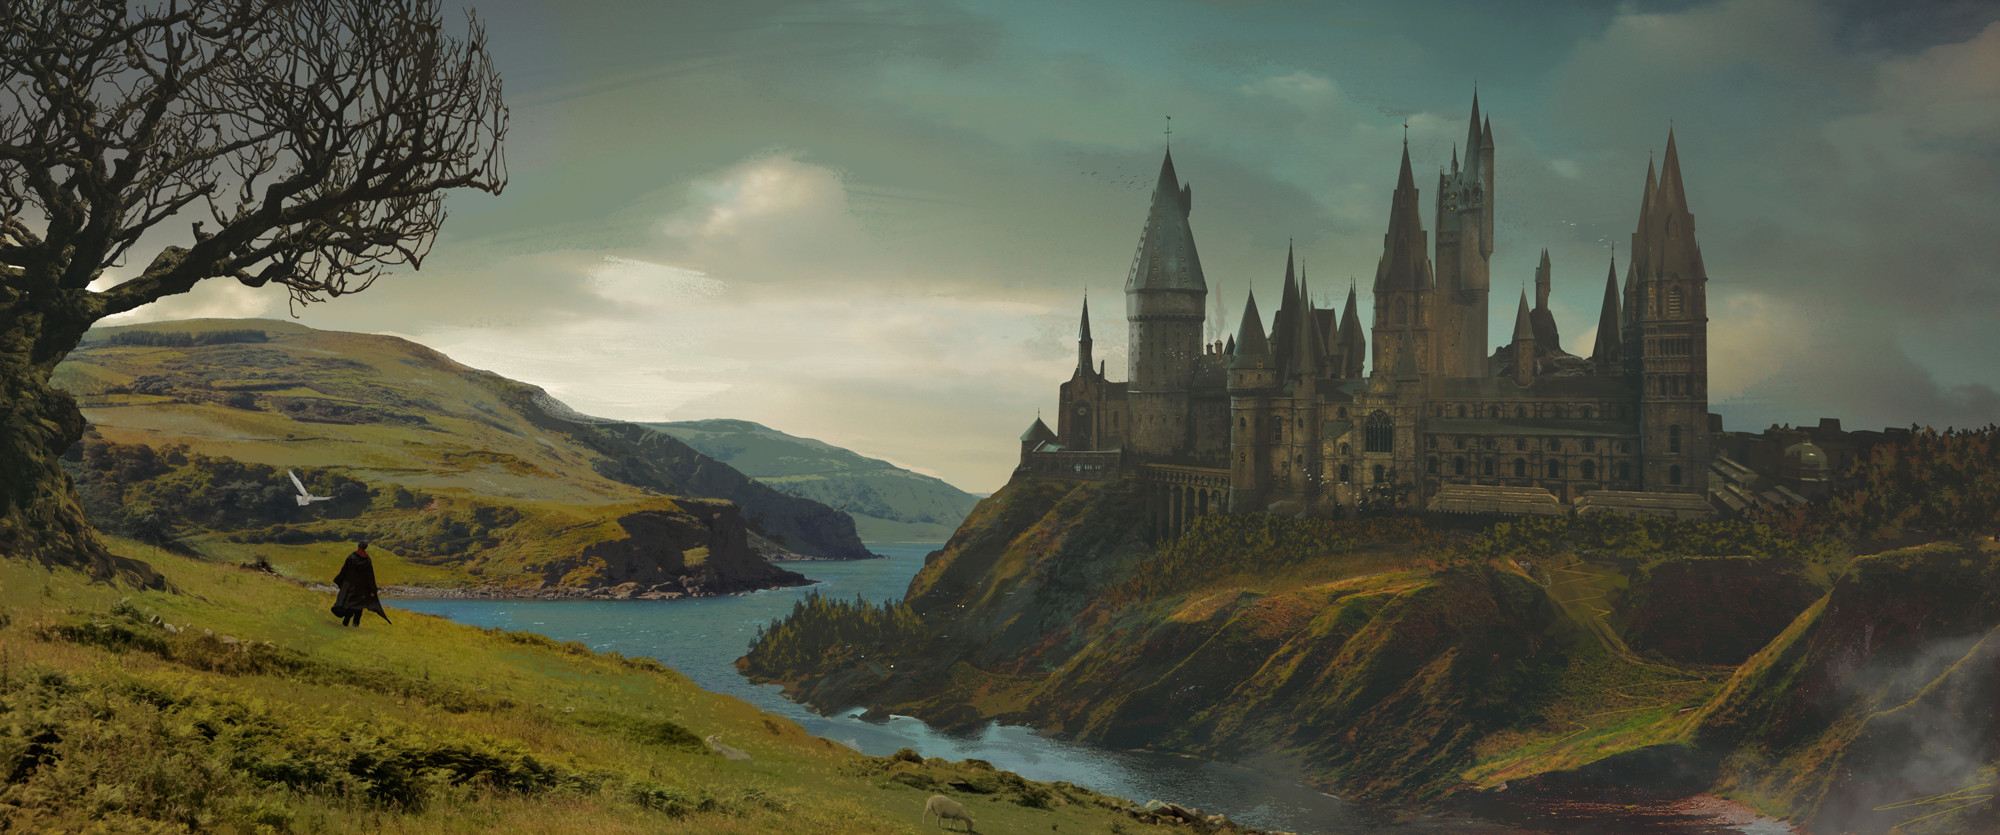 Hogwarts by Jerome Comentale